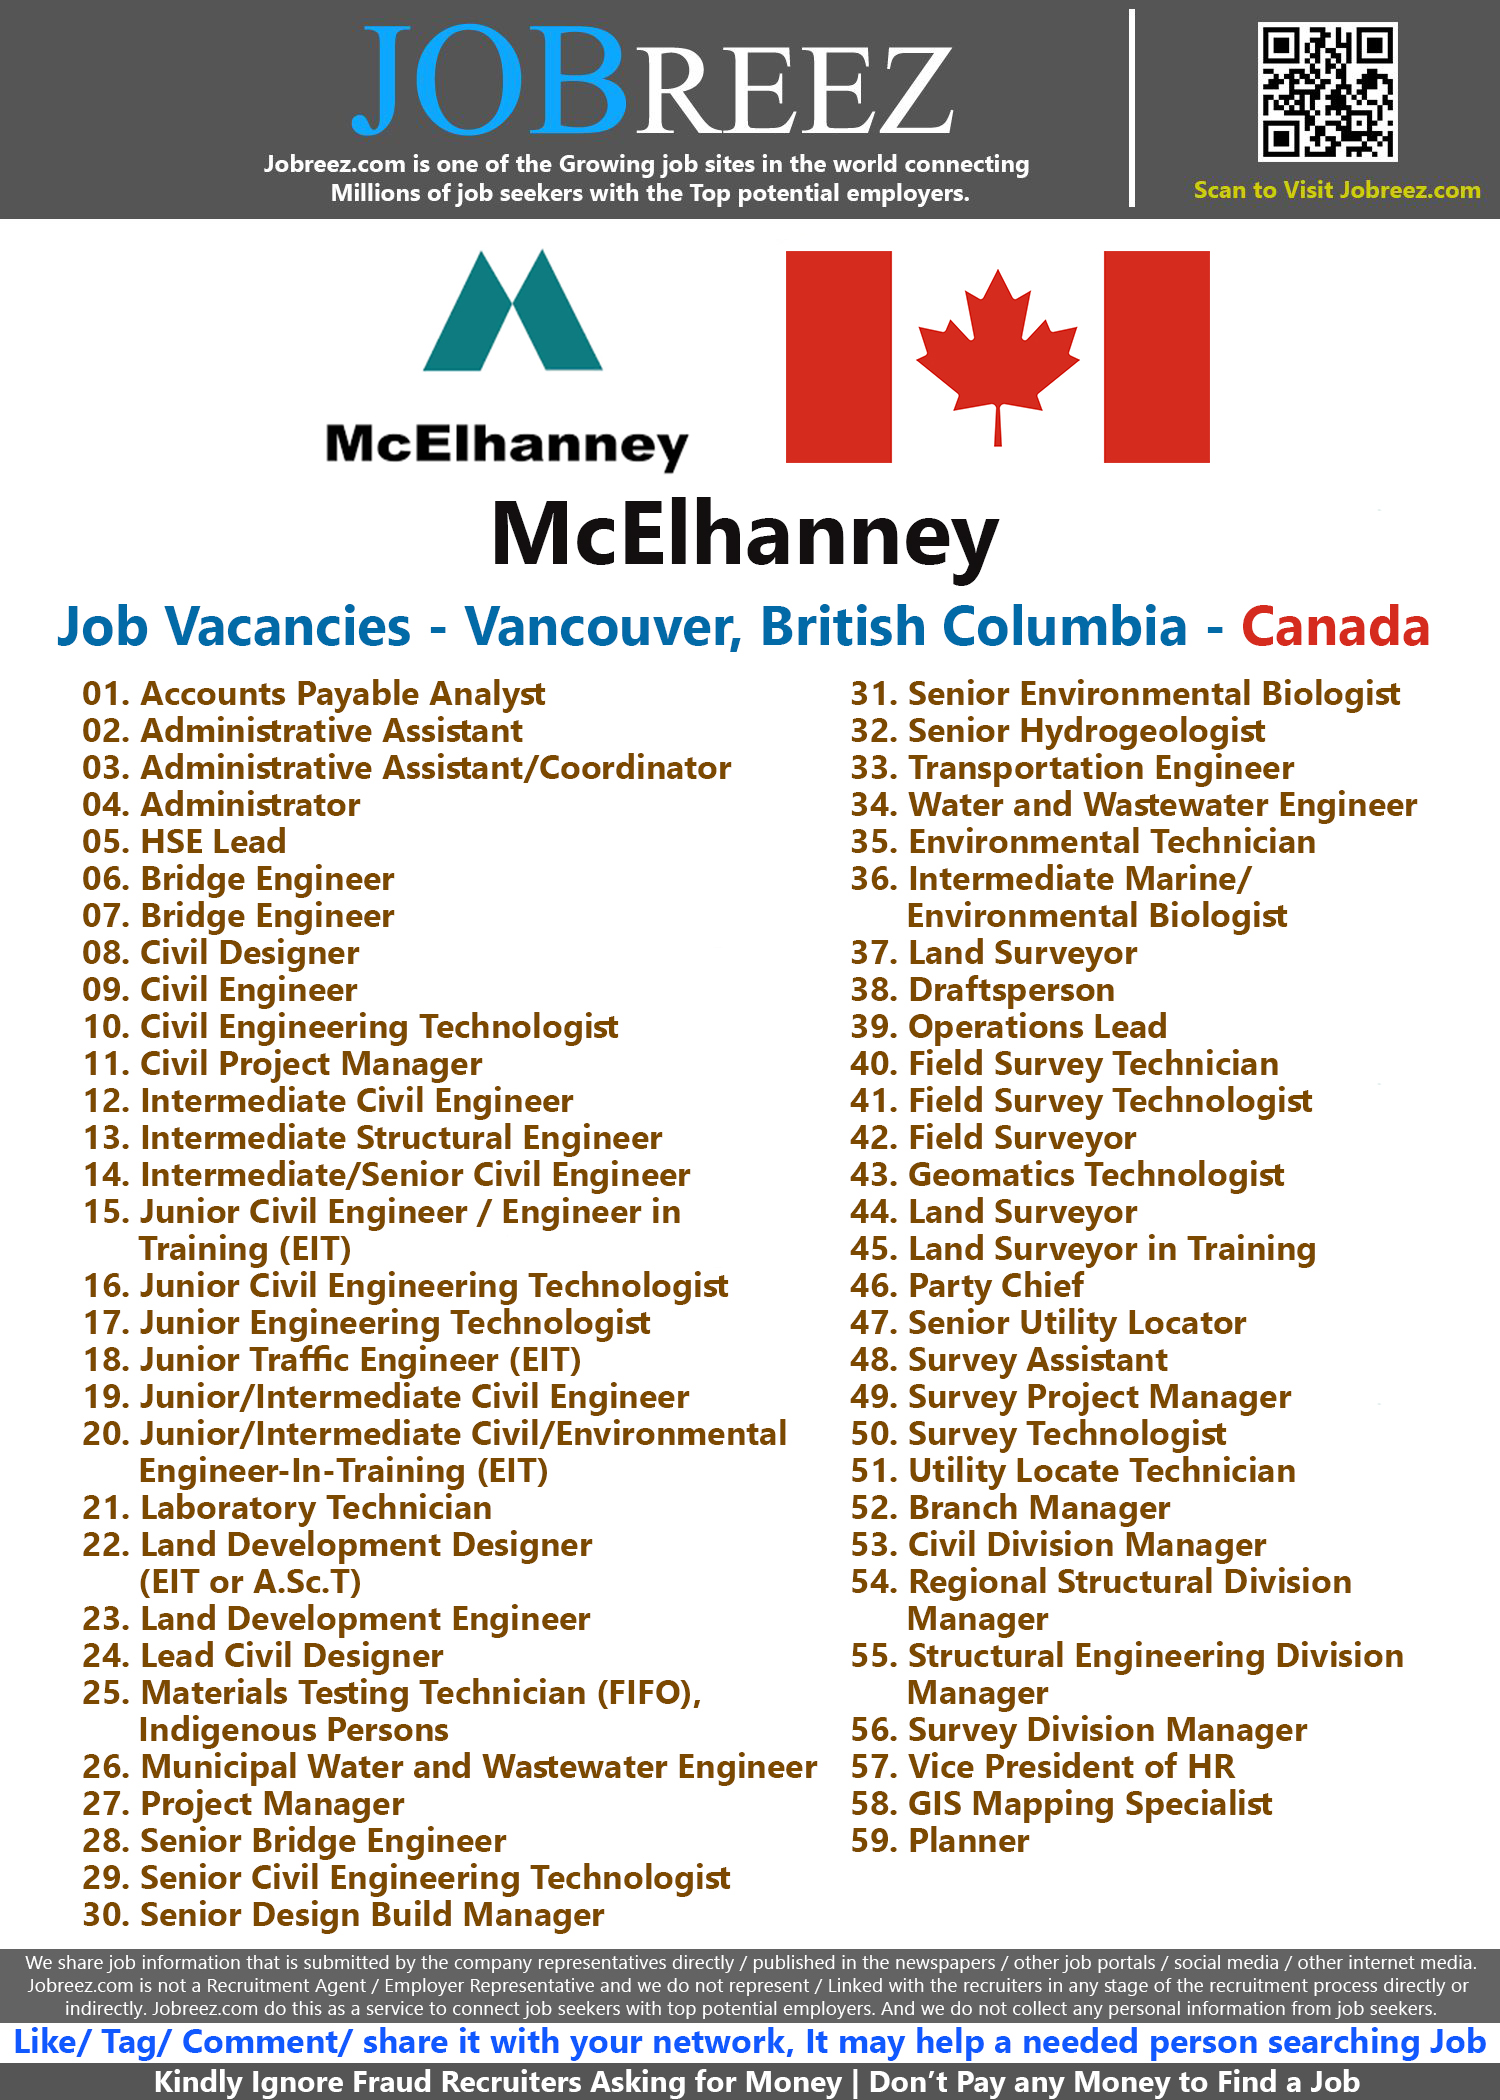 McElhanney Job Vacancies - Vancouver, British Columbia, Canada